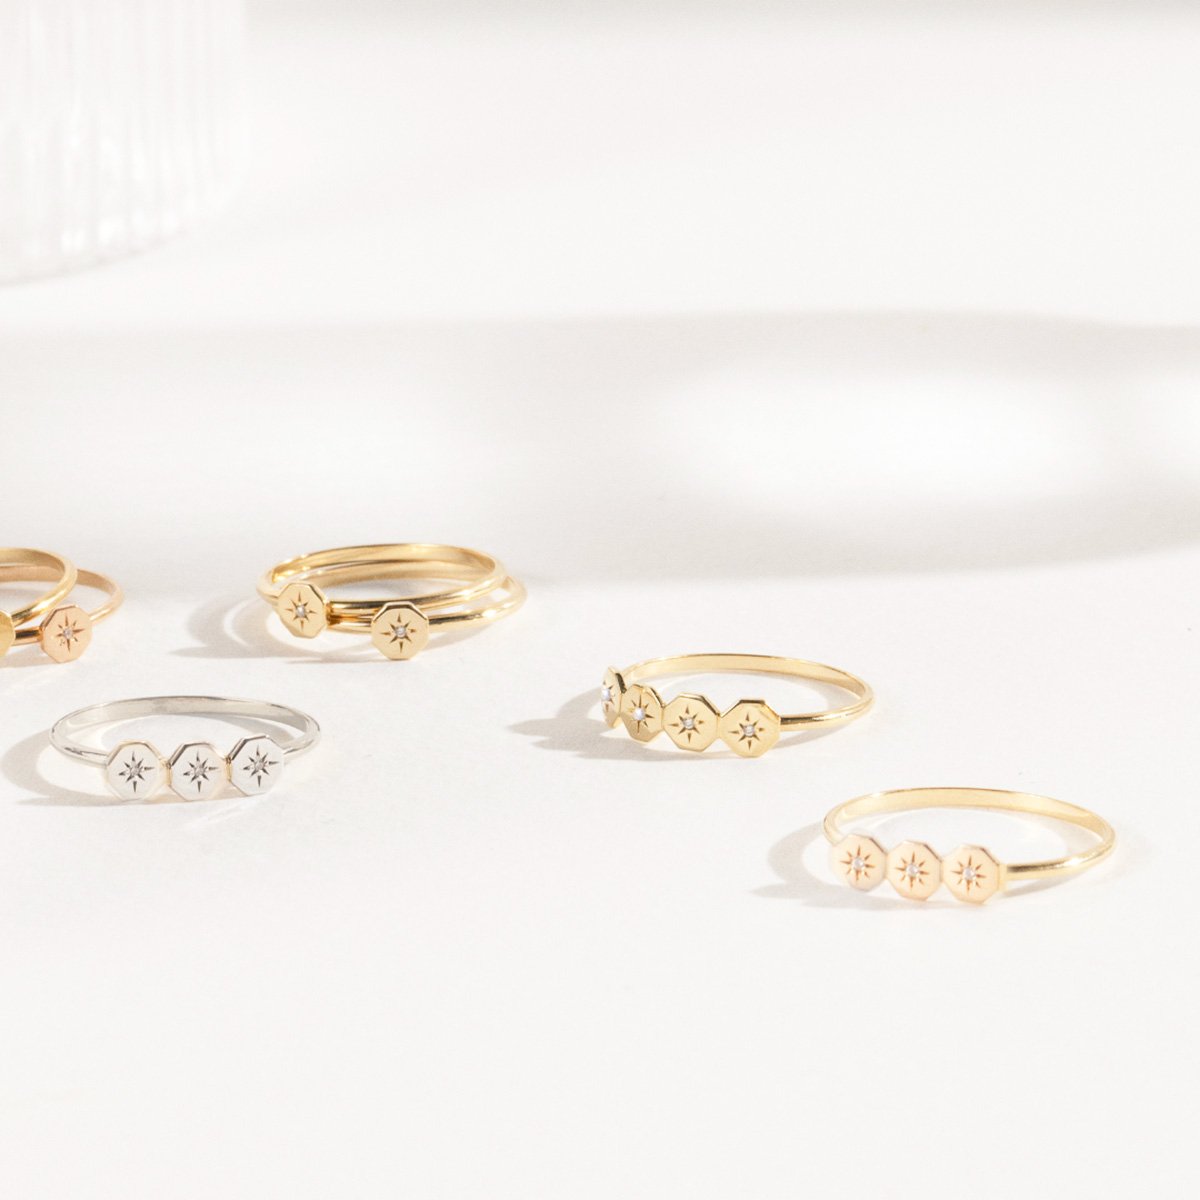 Customizable rings Éternité 18K gold and diamonds